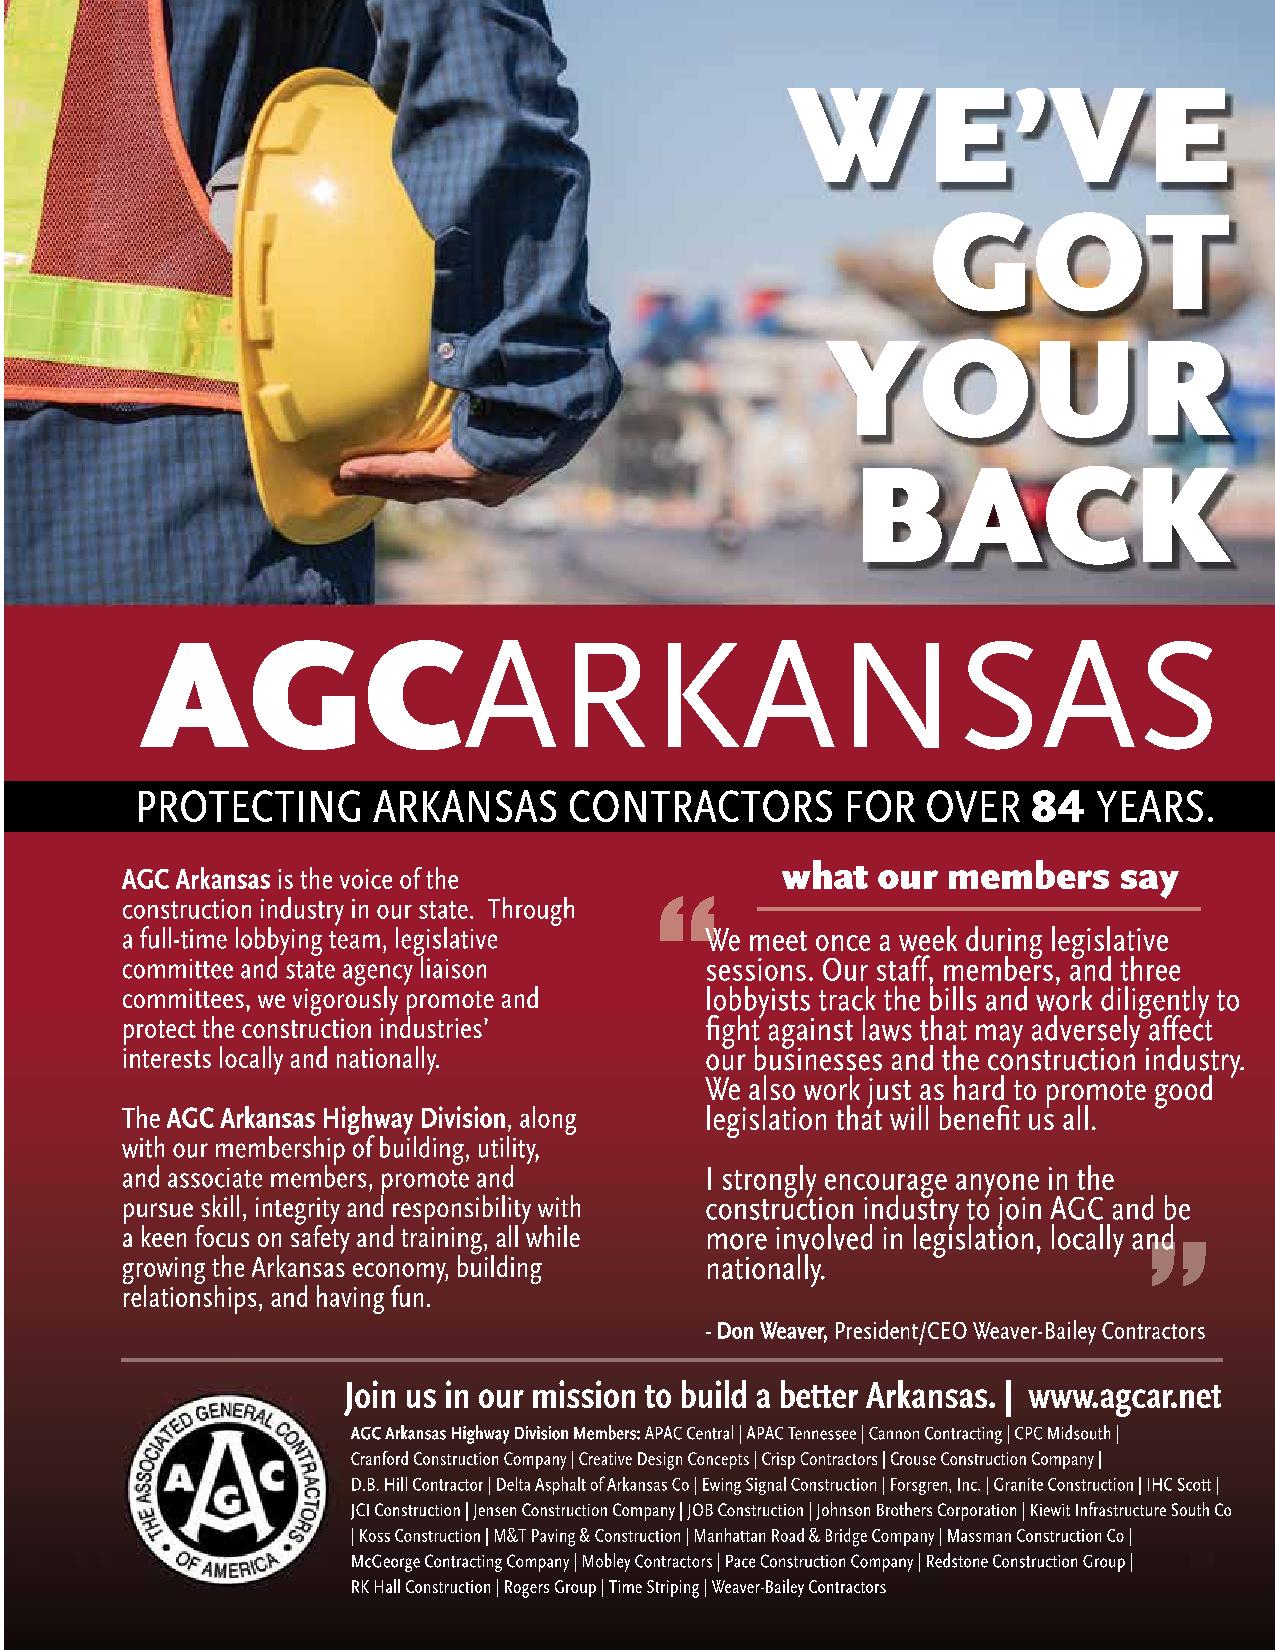 AGC Arkansas-We've Got Your Back